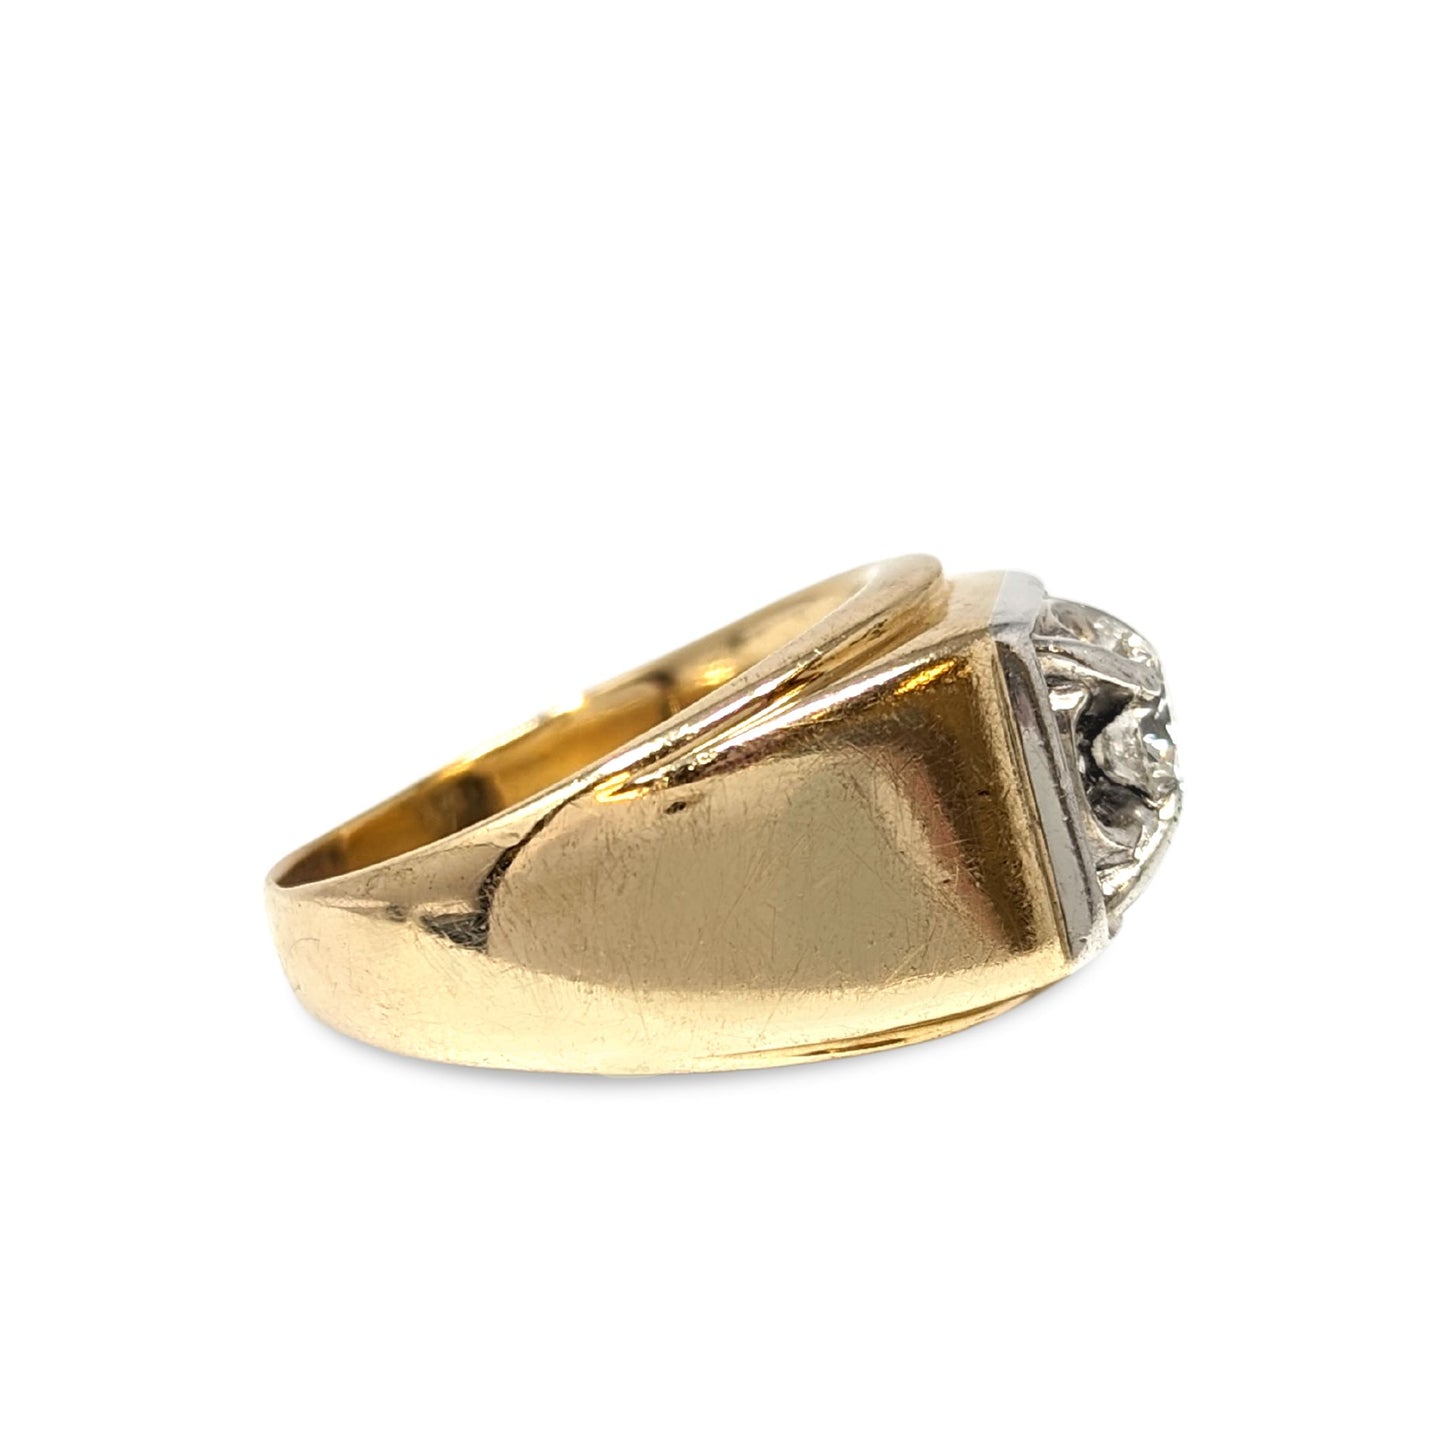 Vintage 14K Gold Men’s .90ct Diamond Ring - Size 9.5